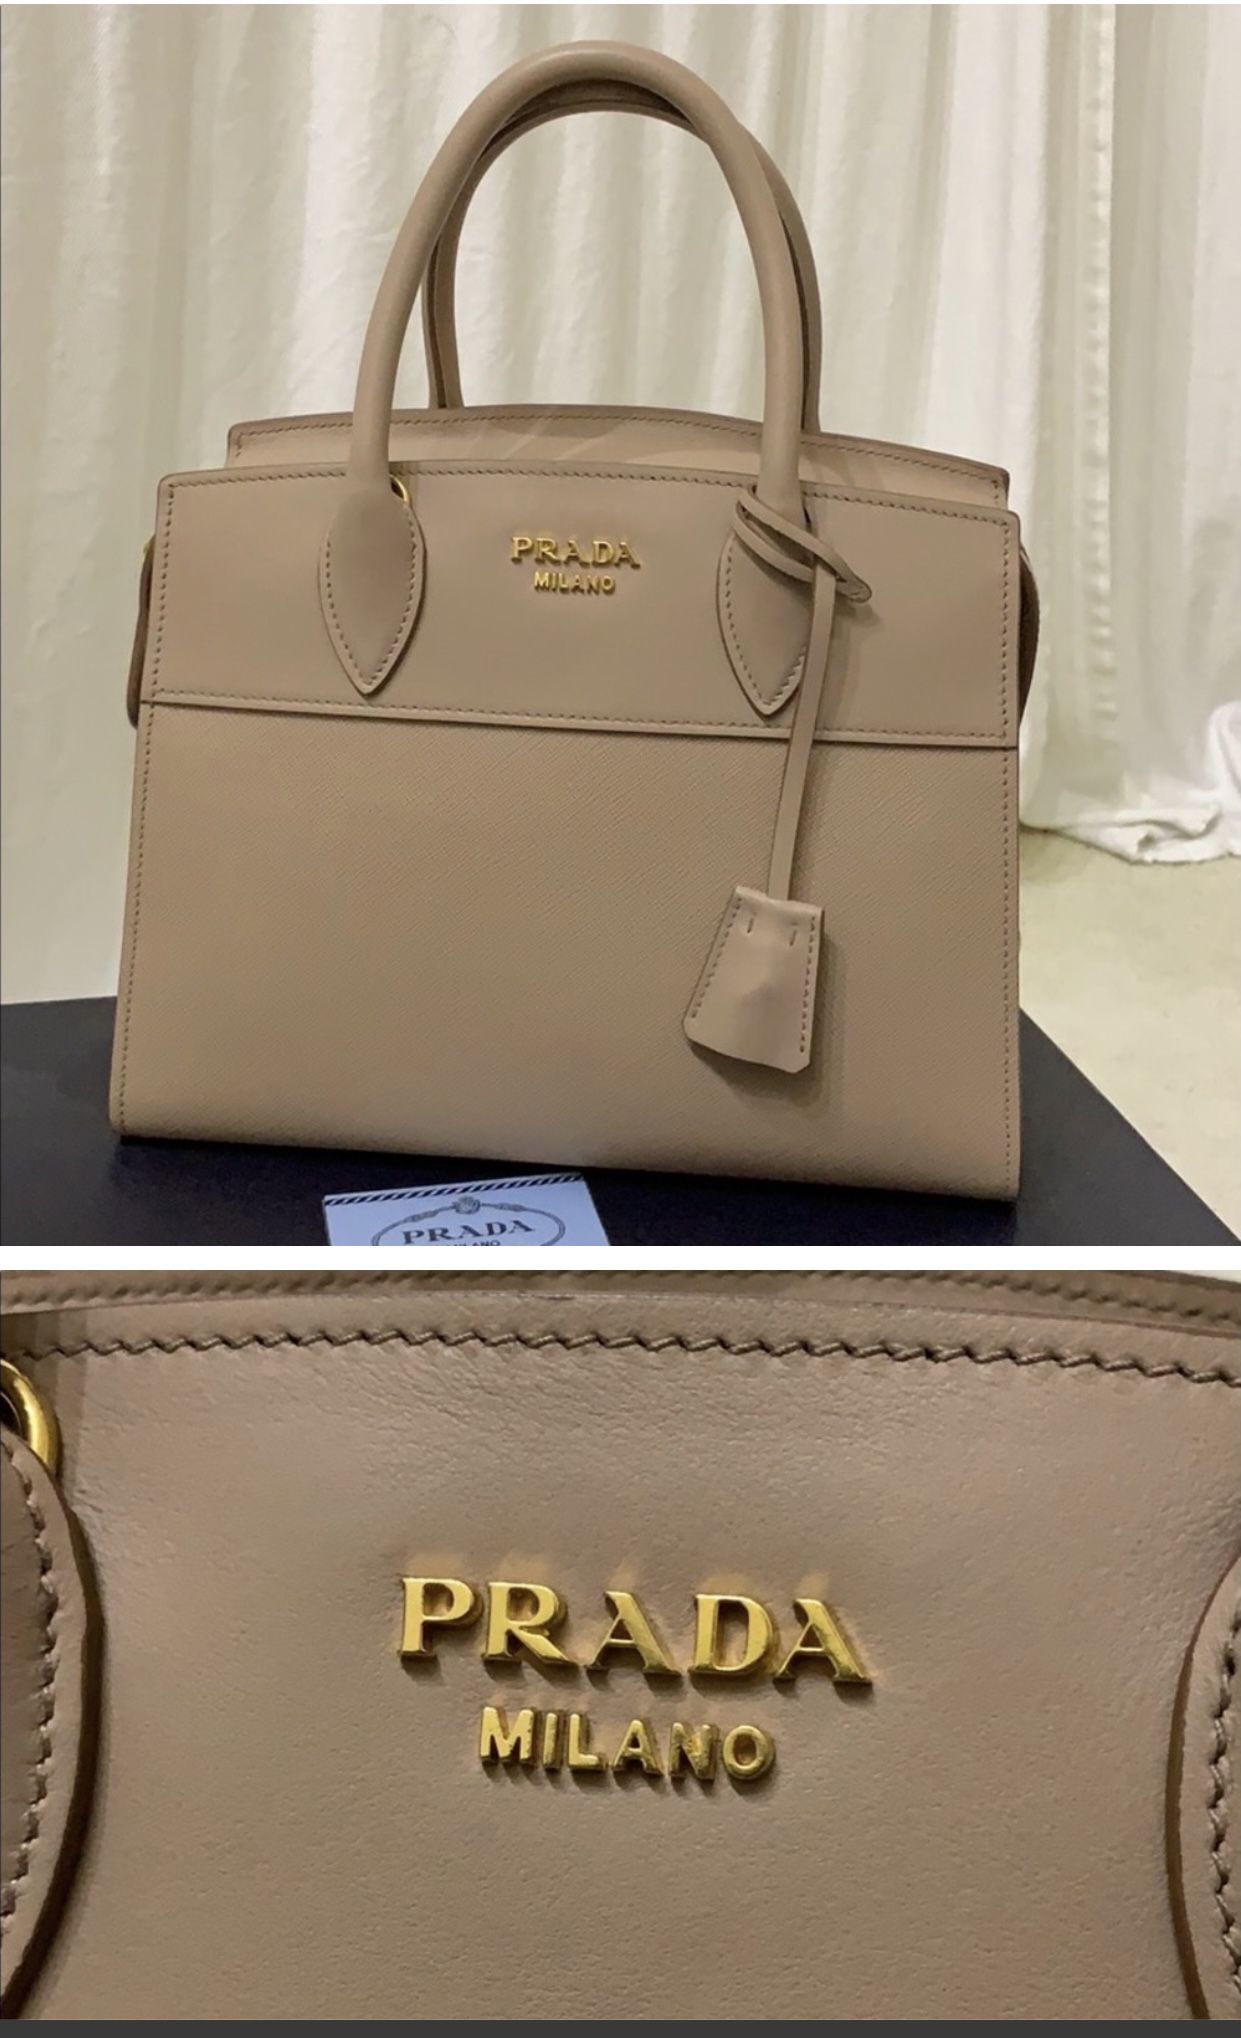 Prada Milano Leather Beige Bag Like New With Box $2,200